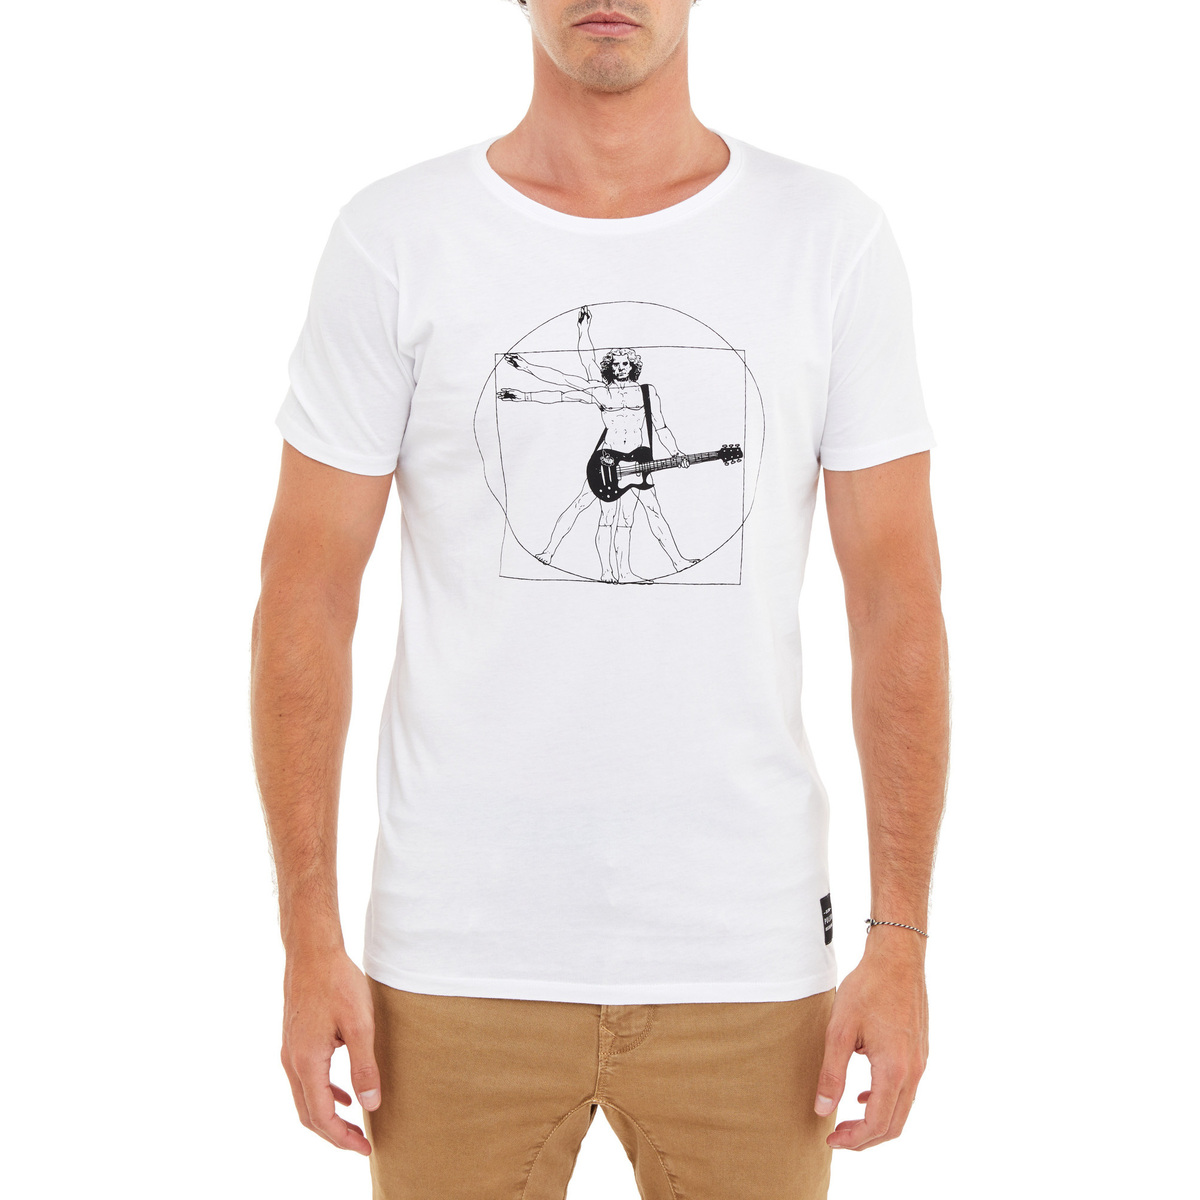 Vêtements Homme Something went Wrong T-Shirt Weiß Pullin T-shirt  DAVINCIWHT Blanc